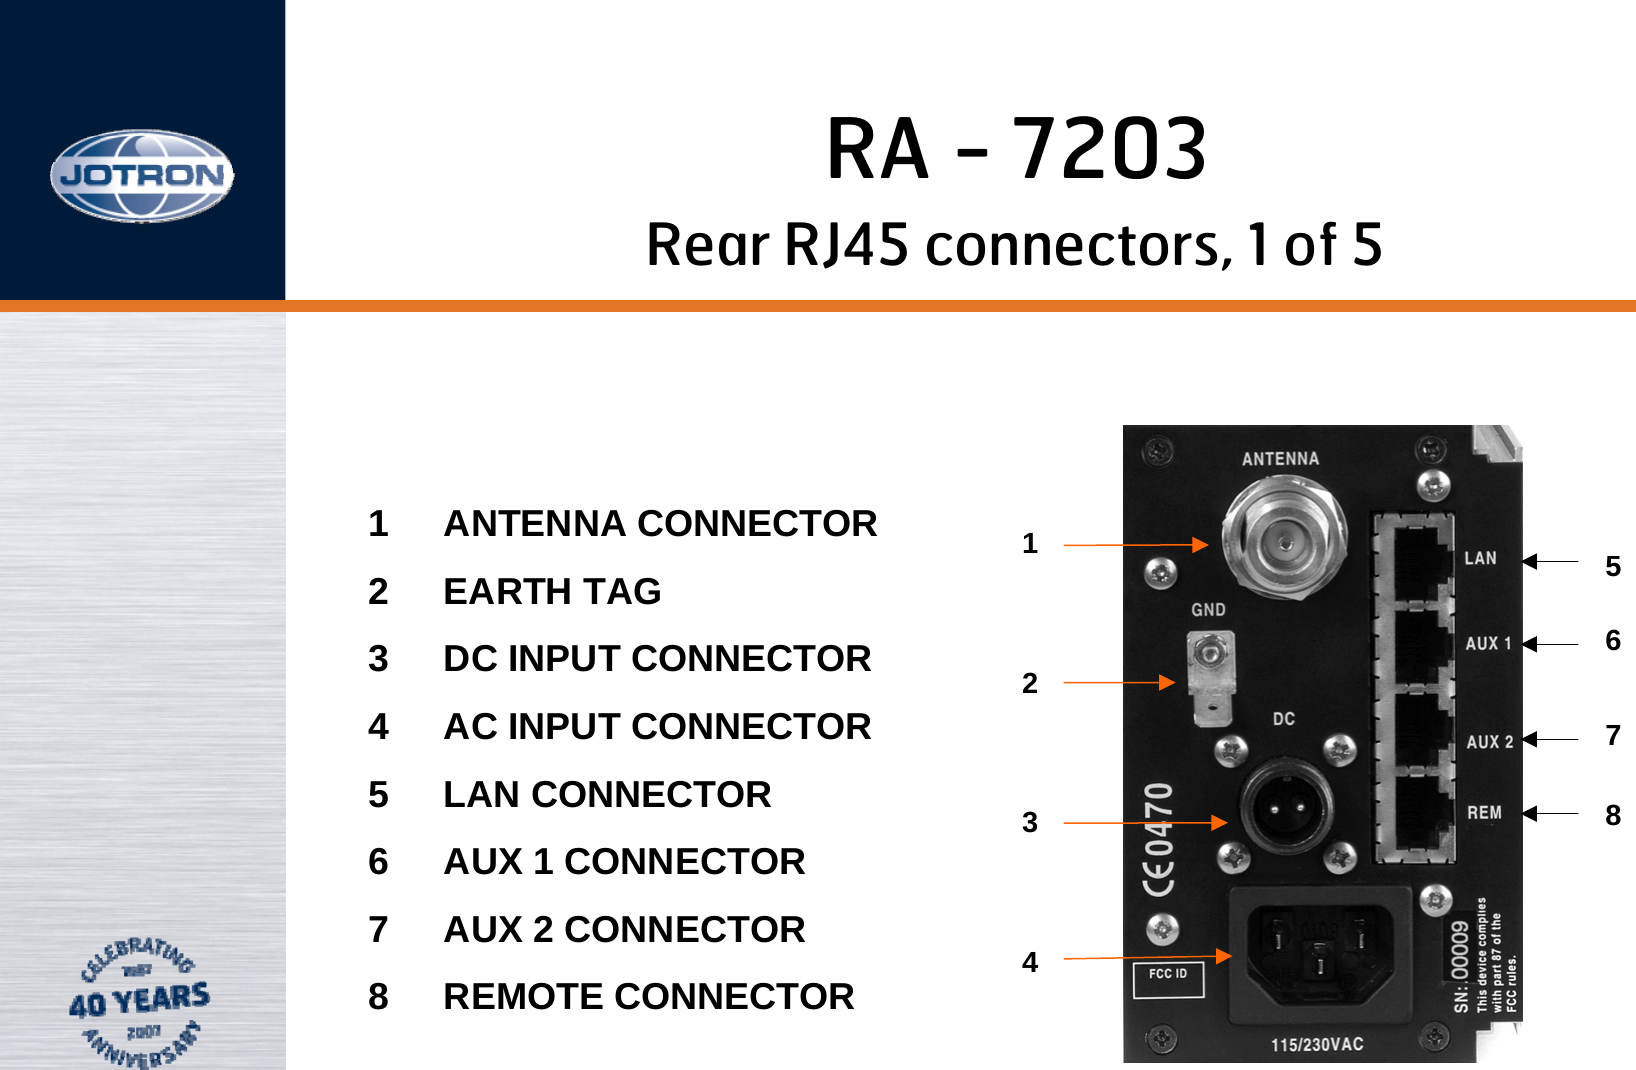 RA - 7203Rear RJ45 connectors, 1 of 5123456781 ANTENNA CONNECTOR2 EARTH TAG3 DC INPUT CONNECTOR4 AC INPUT CONNECTOR5 LAN CONNECTOR6 AUX 1 CONNECTOR7 AUX 2 CONNECTOR8 REMOTE CONNECTOR